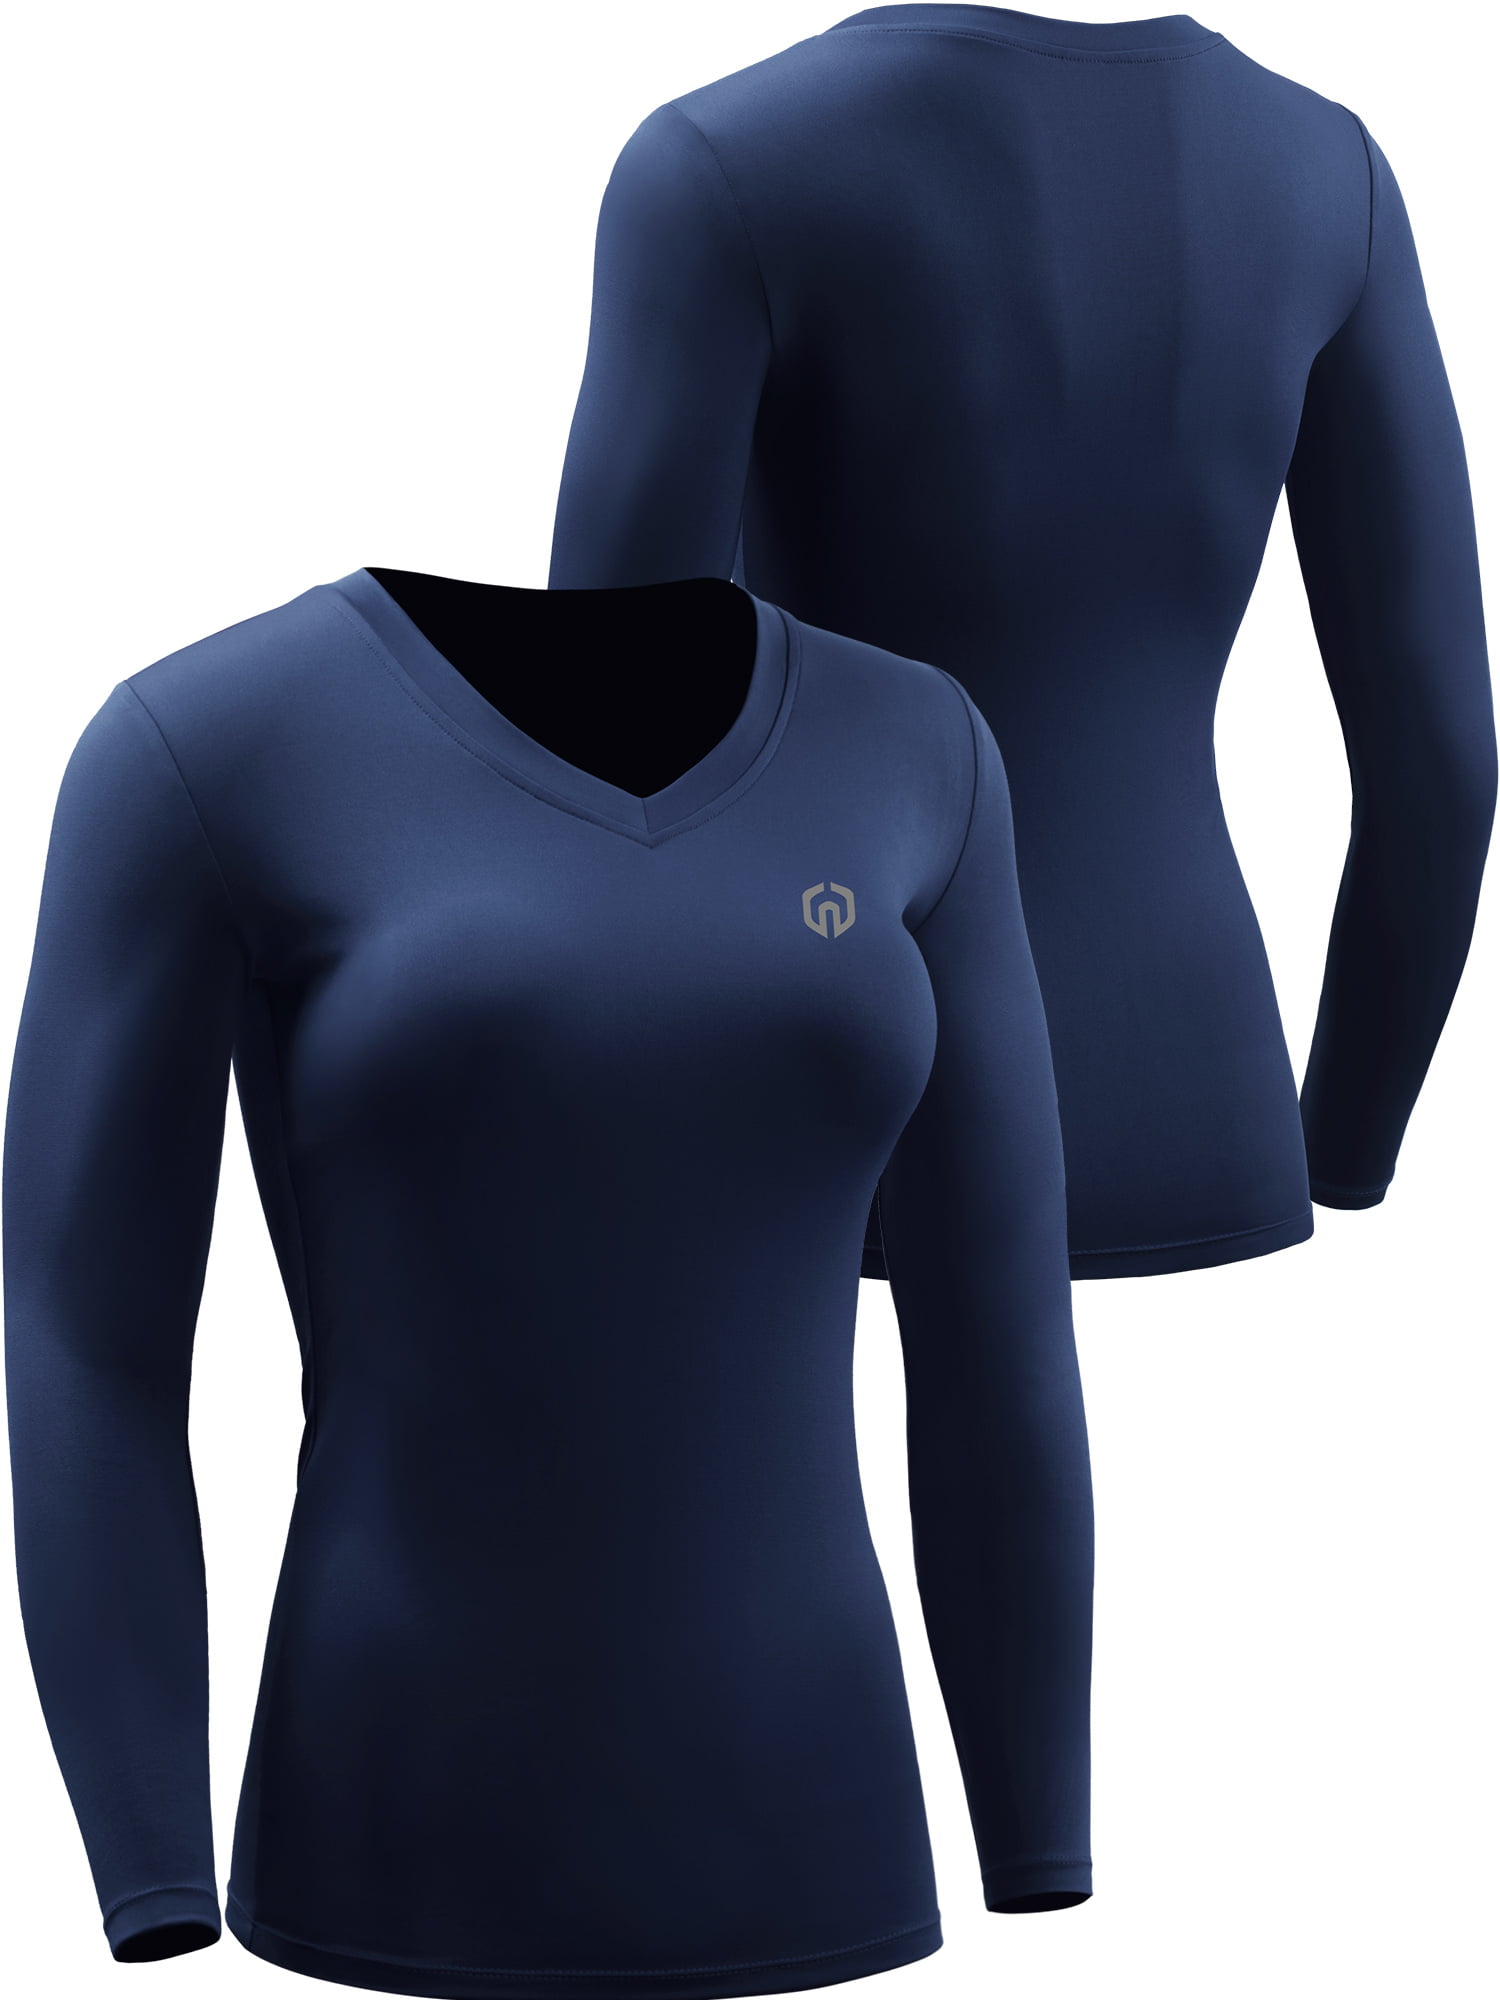 NELEUS Womens Compression Shirts Yoga V Neck Shirt 3 Workout T Size Sleeve Blue,US L Long Pack,Black+Gray+Navy